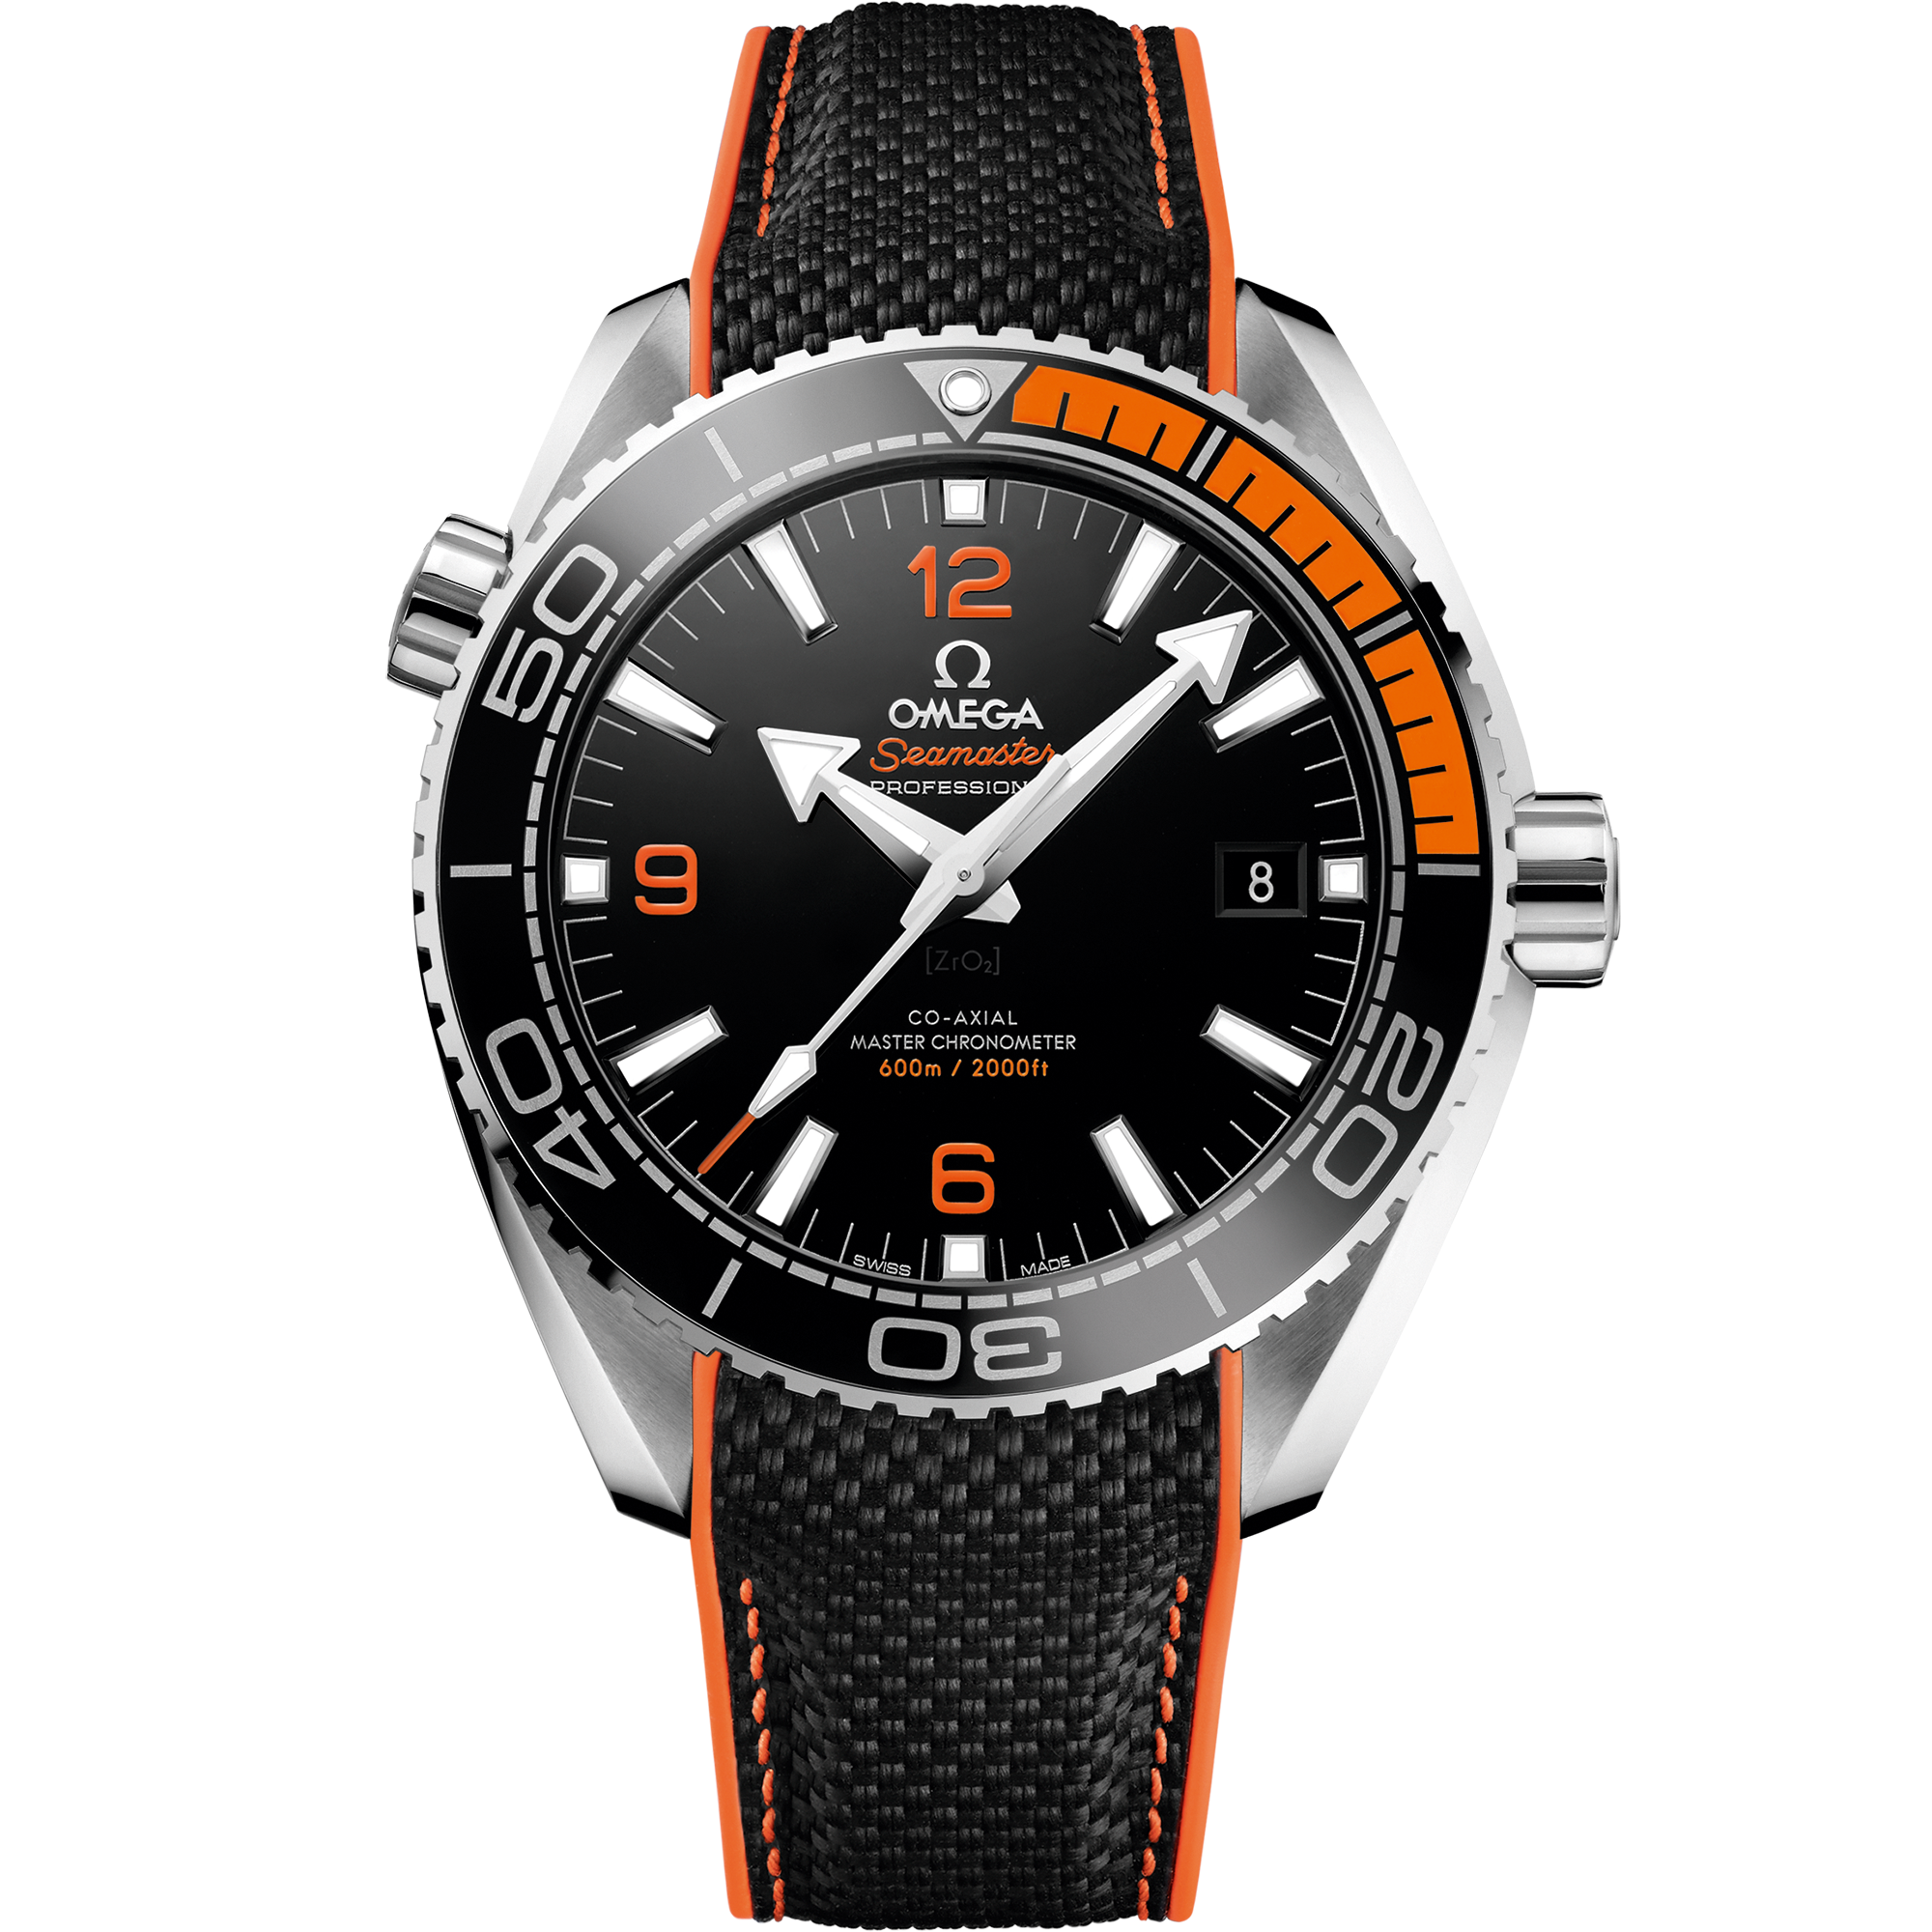 Planet Ocean 600M Seamaster Steel Chronometer Watch 215.30.44.21.01.002 |  OMEGA US®